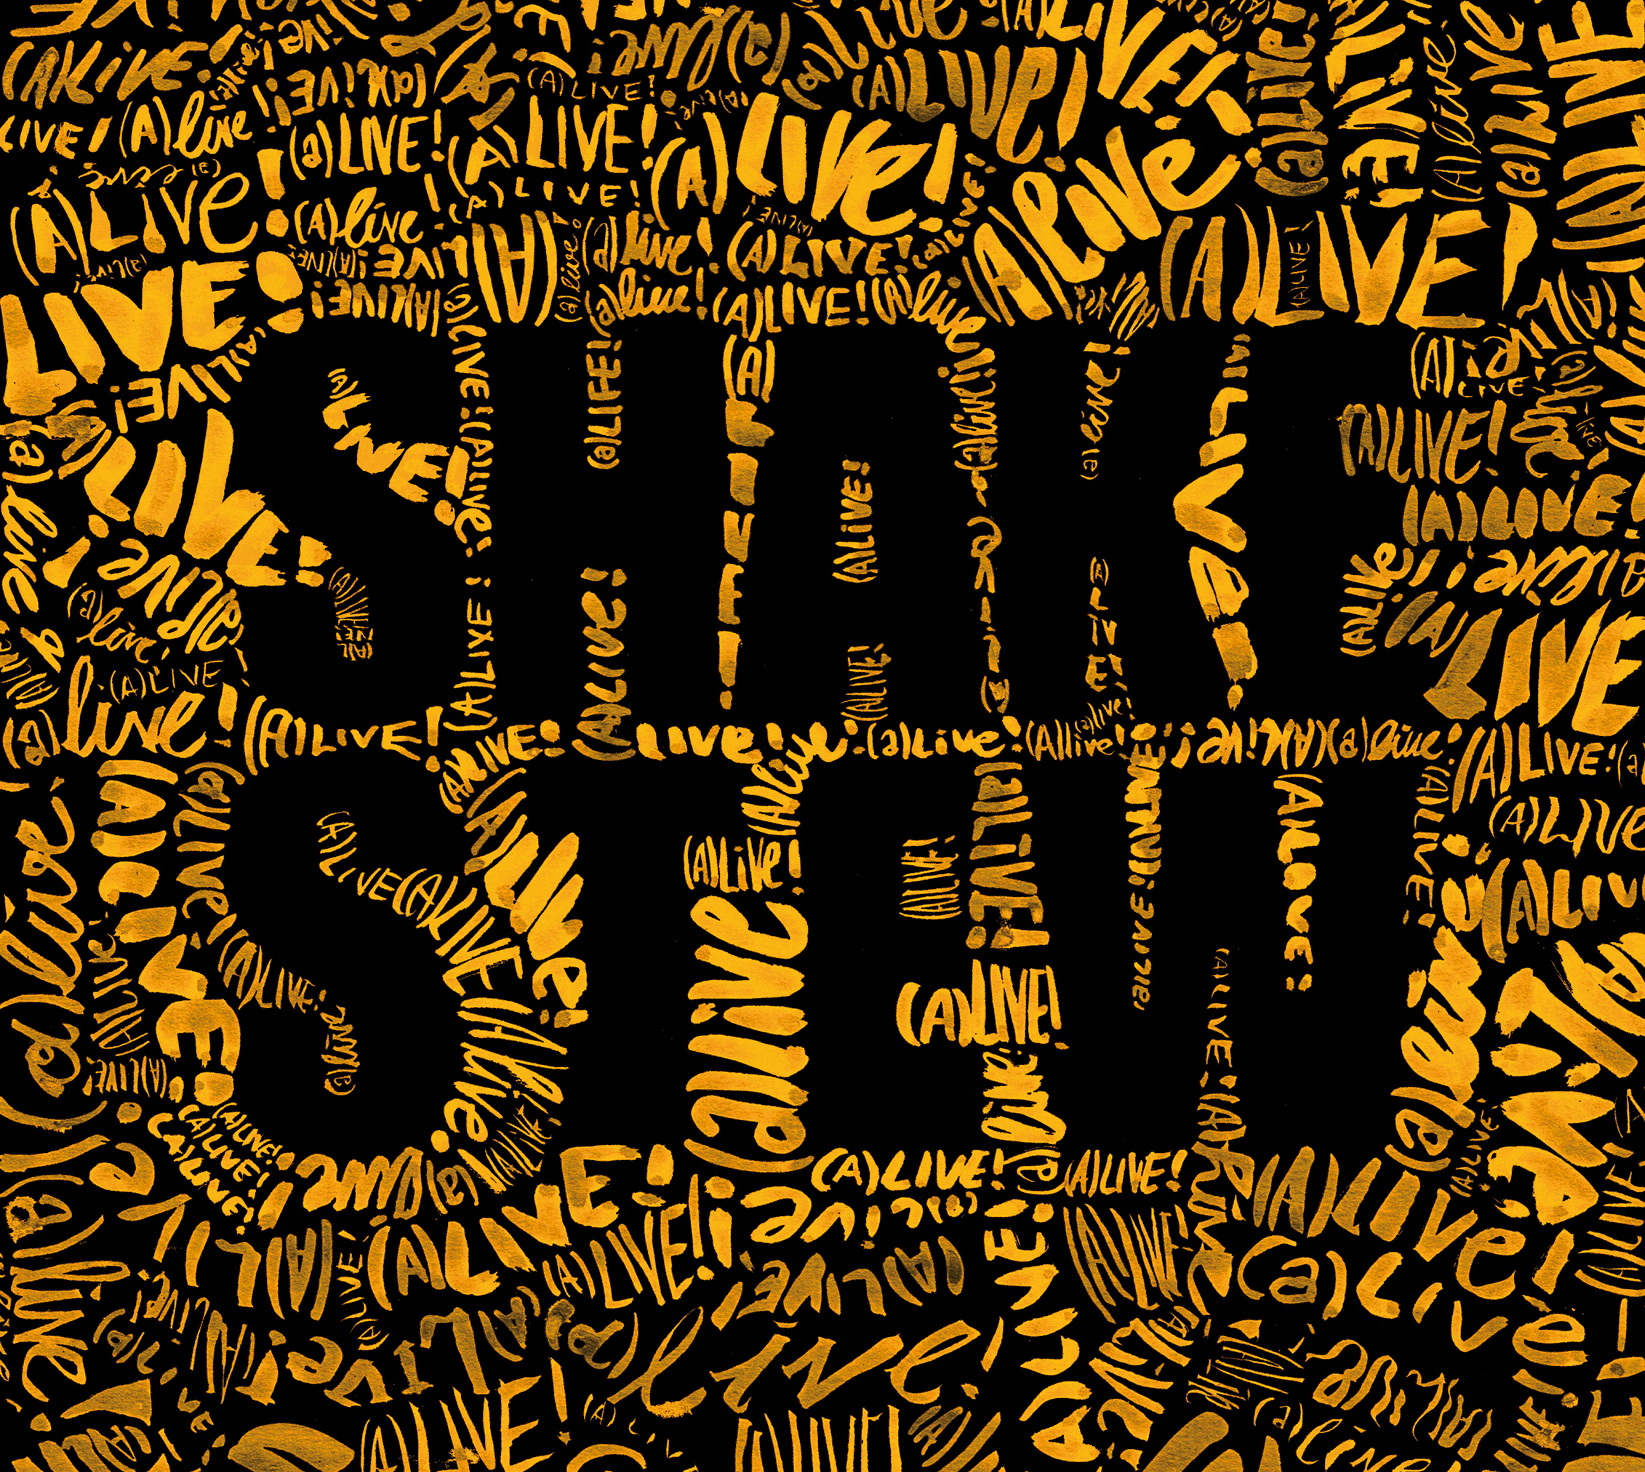 1. CD Shake Cover